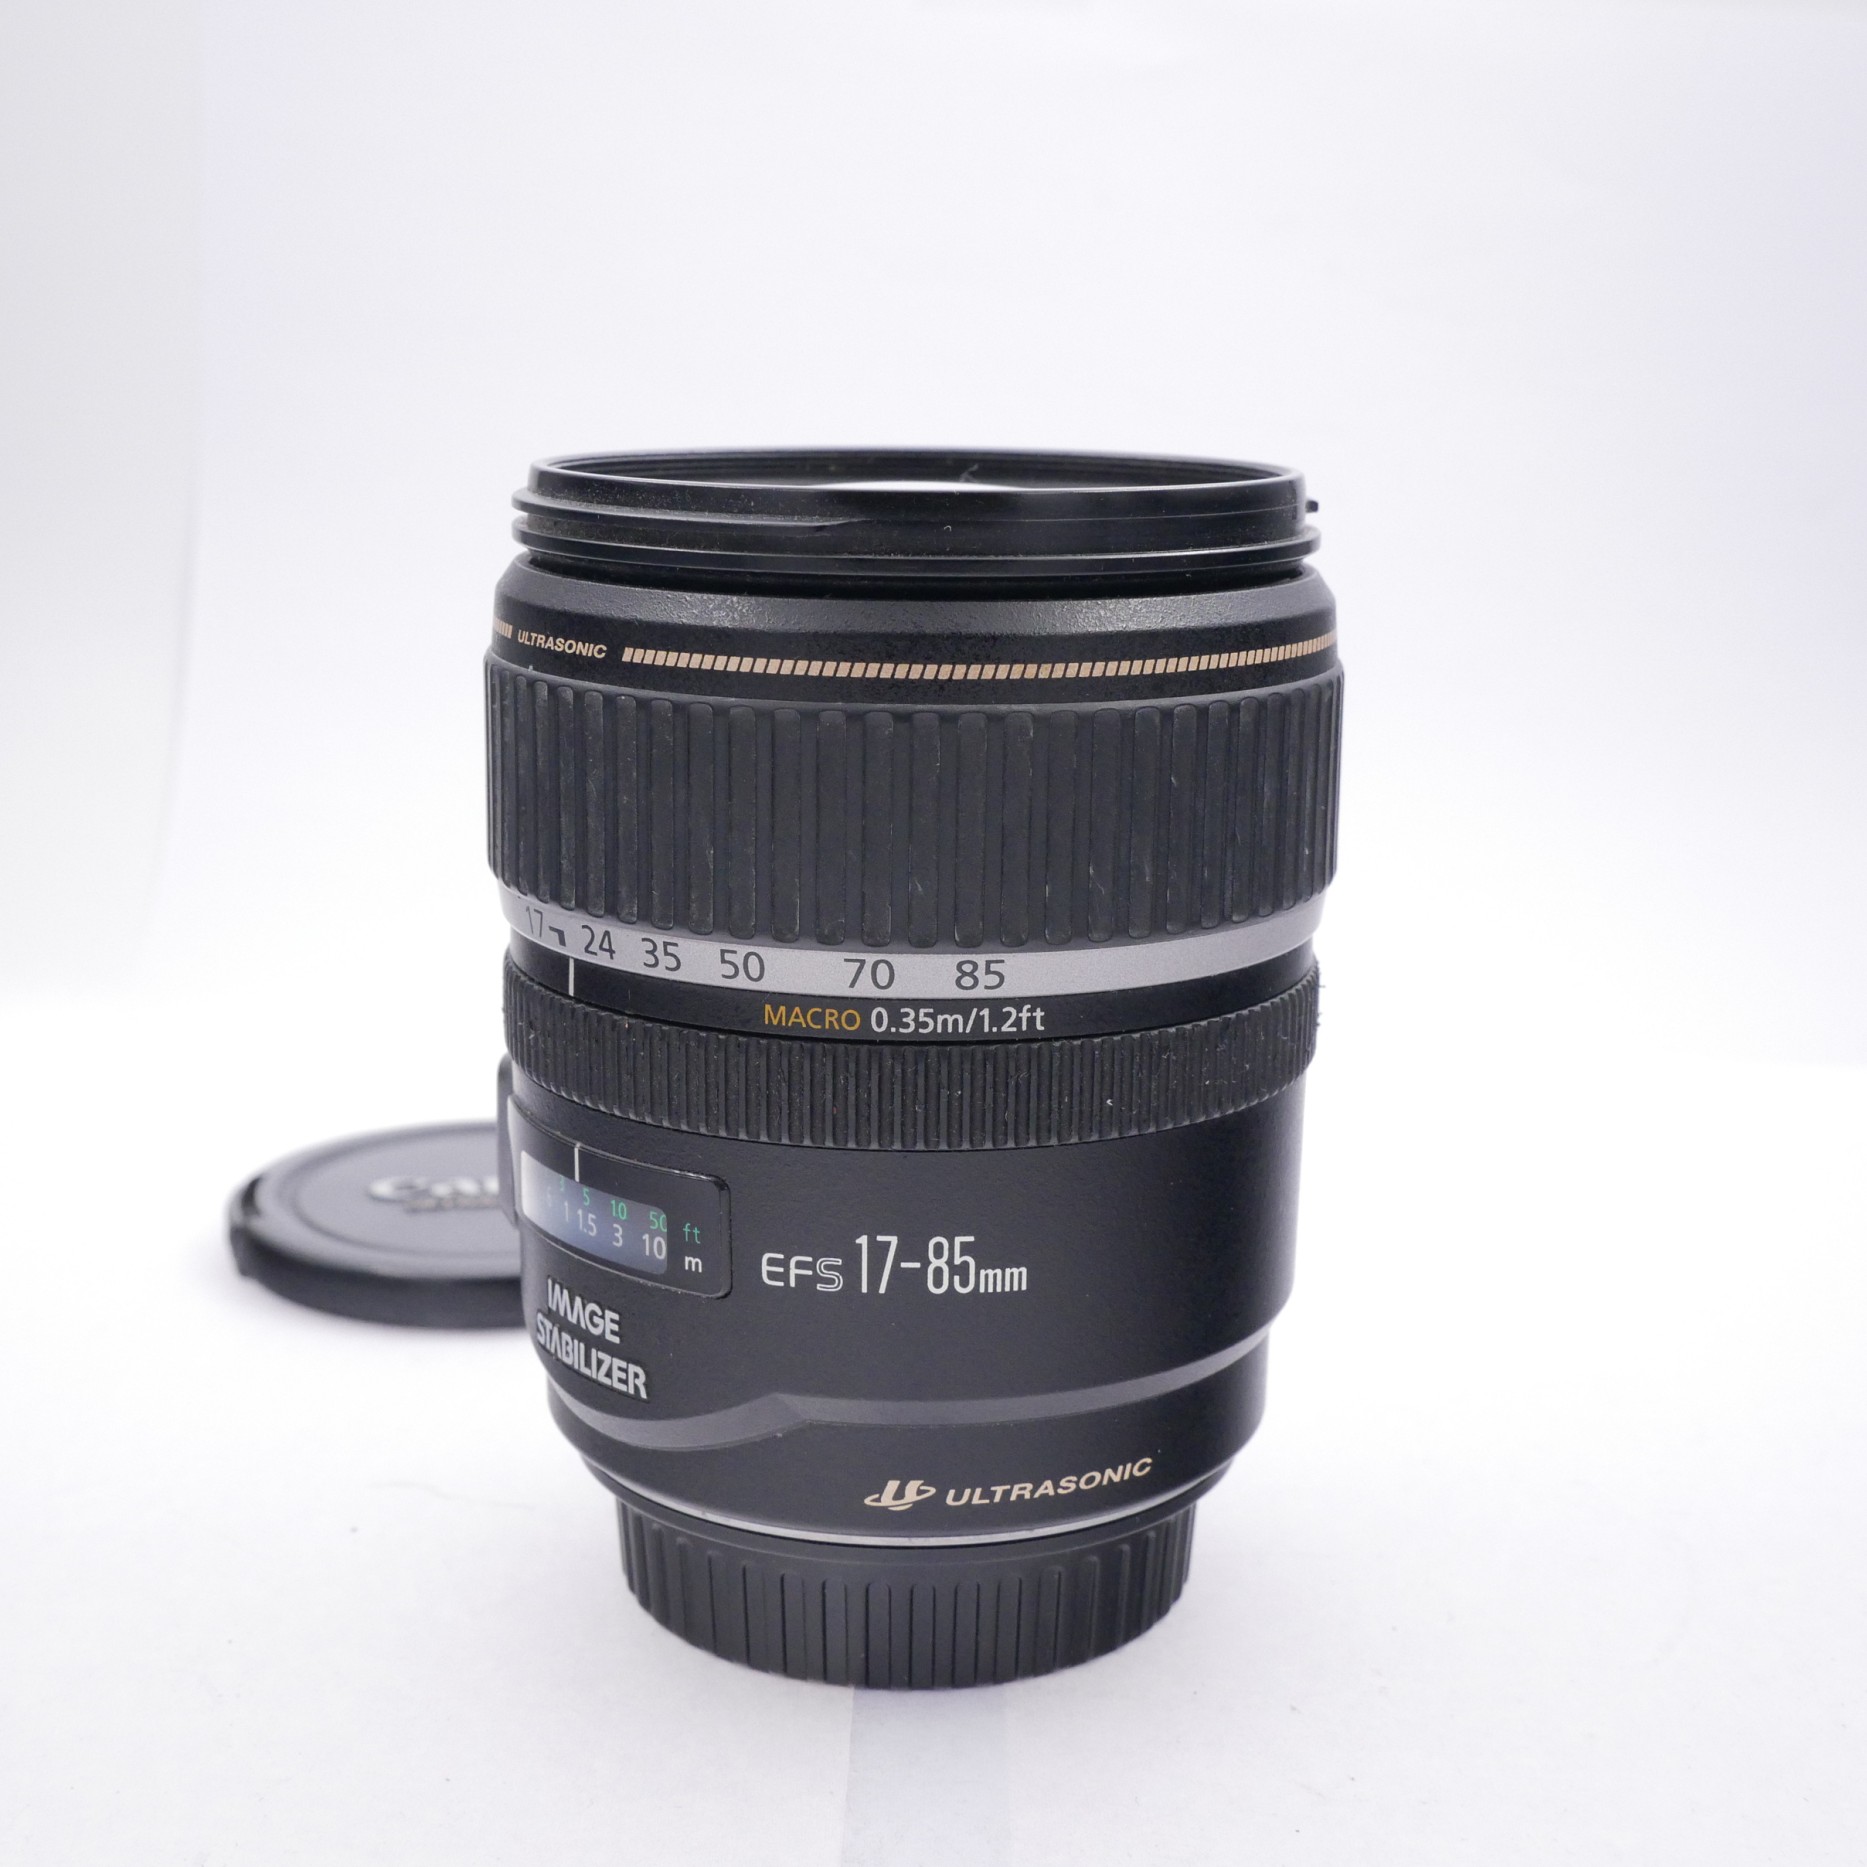 Canon EF-S 17-85mm F4-5.6 IS USM Lens